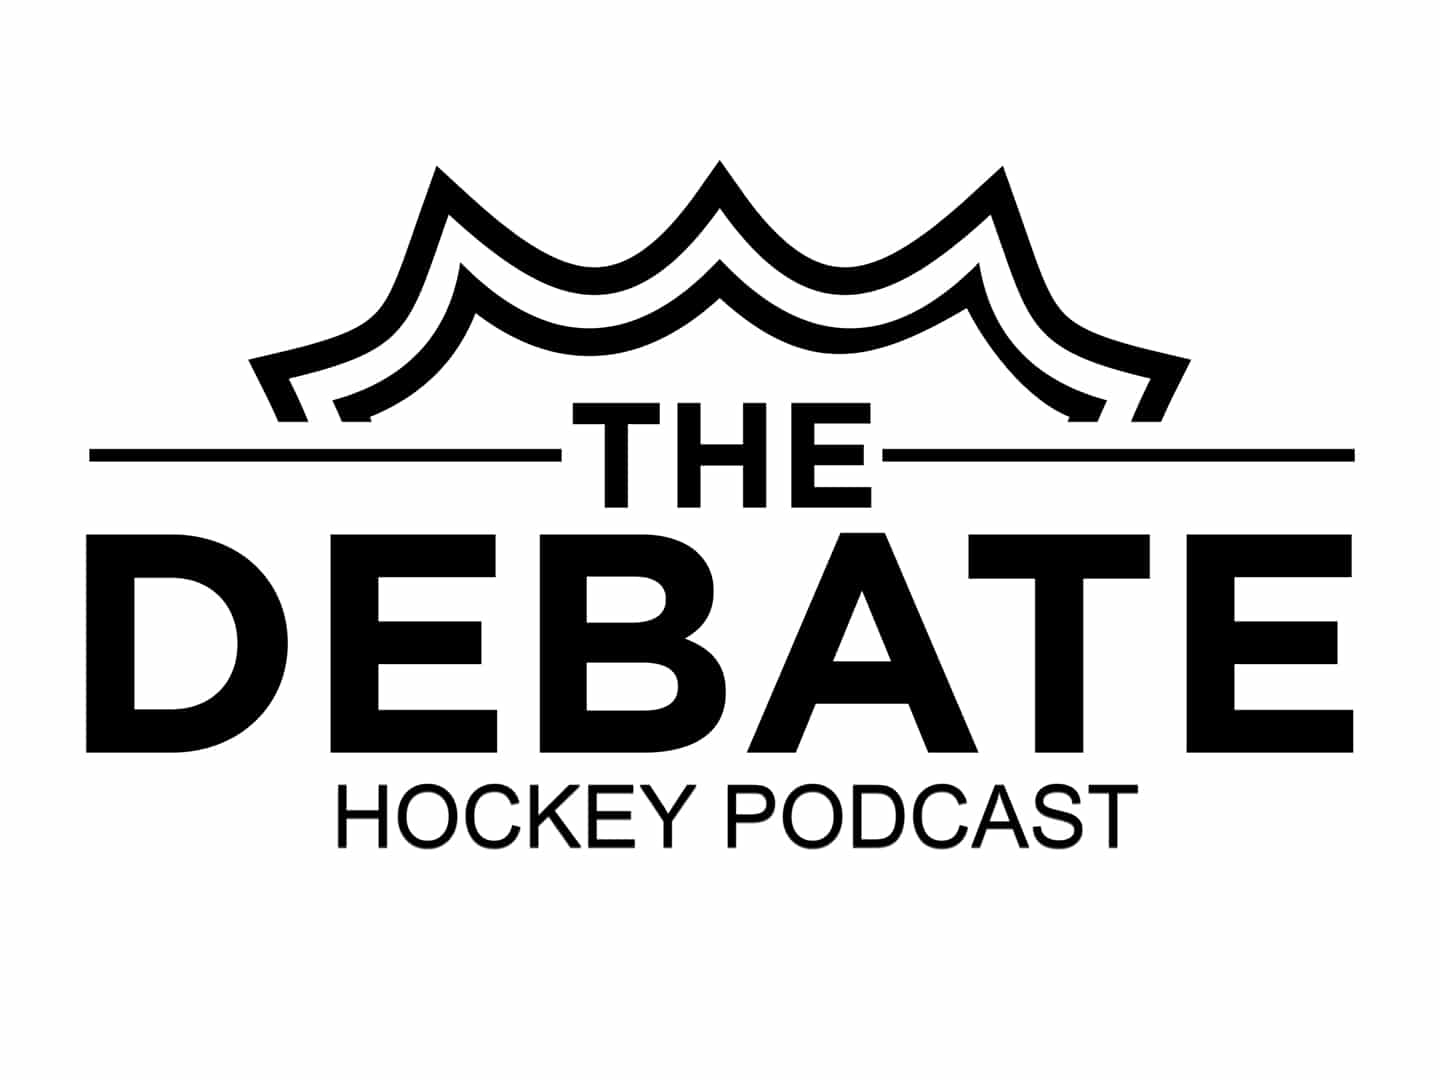 THE DEBATE Hockey Podcast